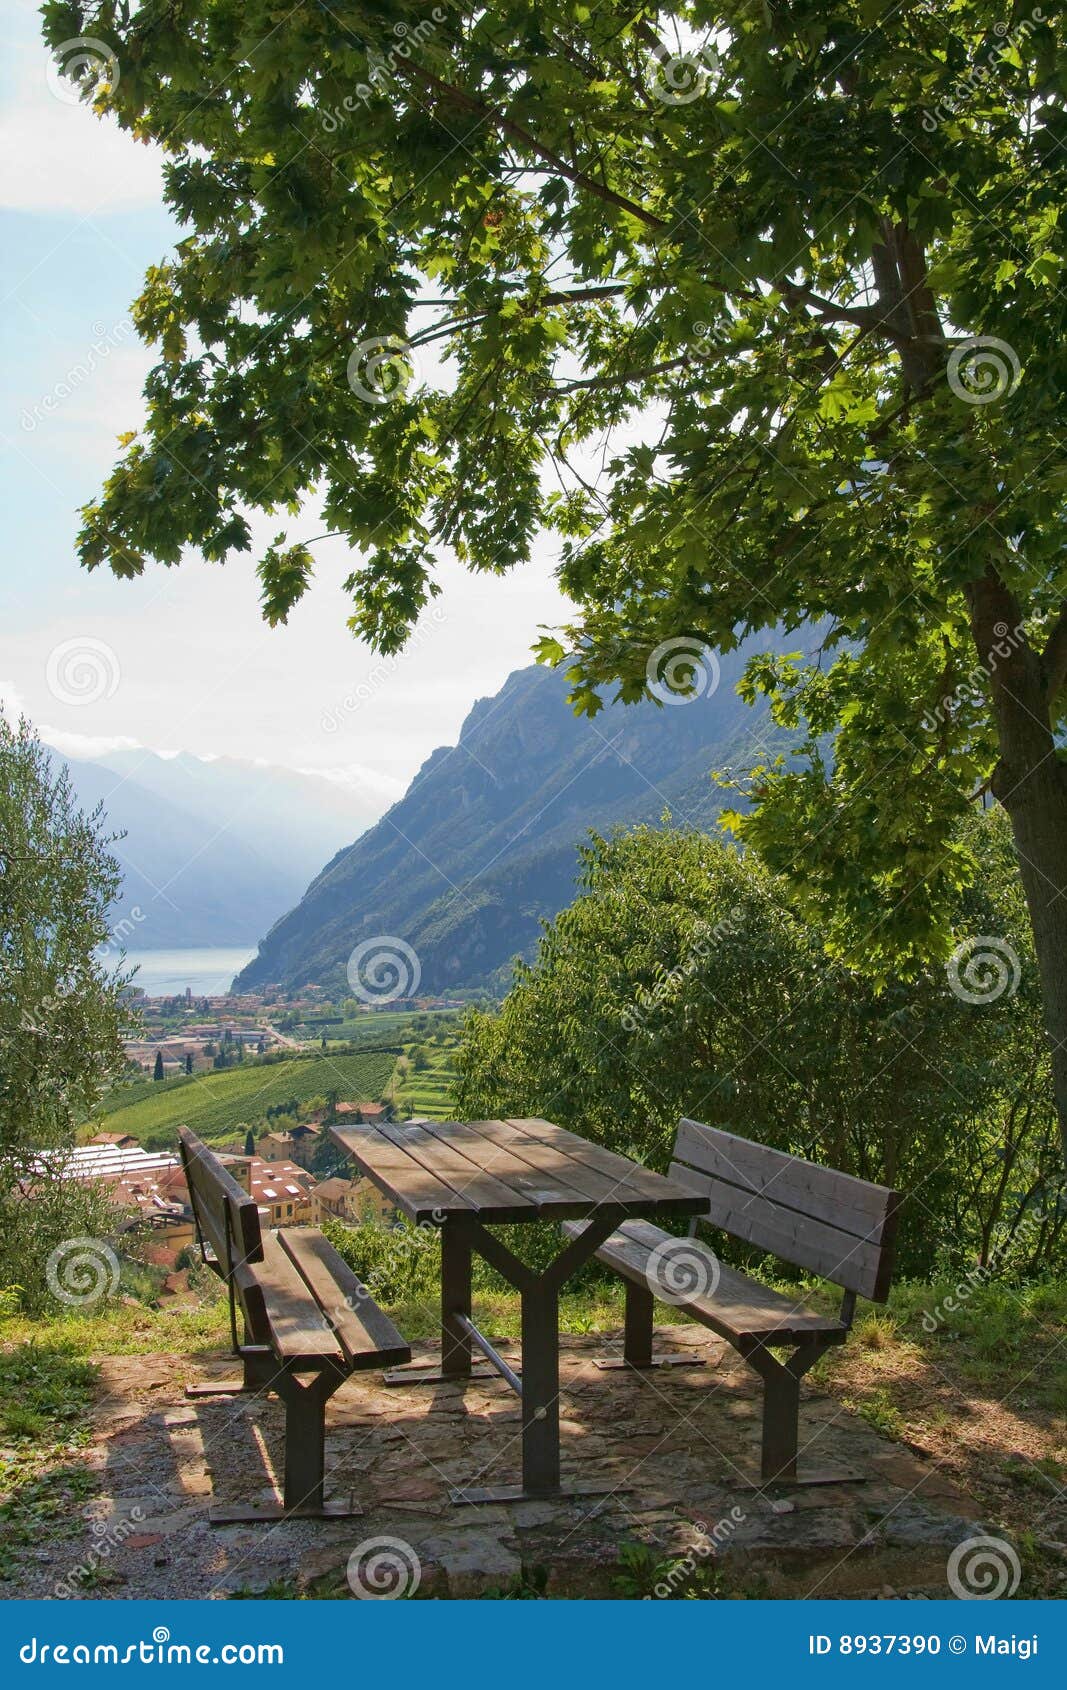 Picnic Table Under Tree Stock Photo - Image: 8937390